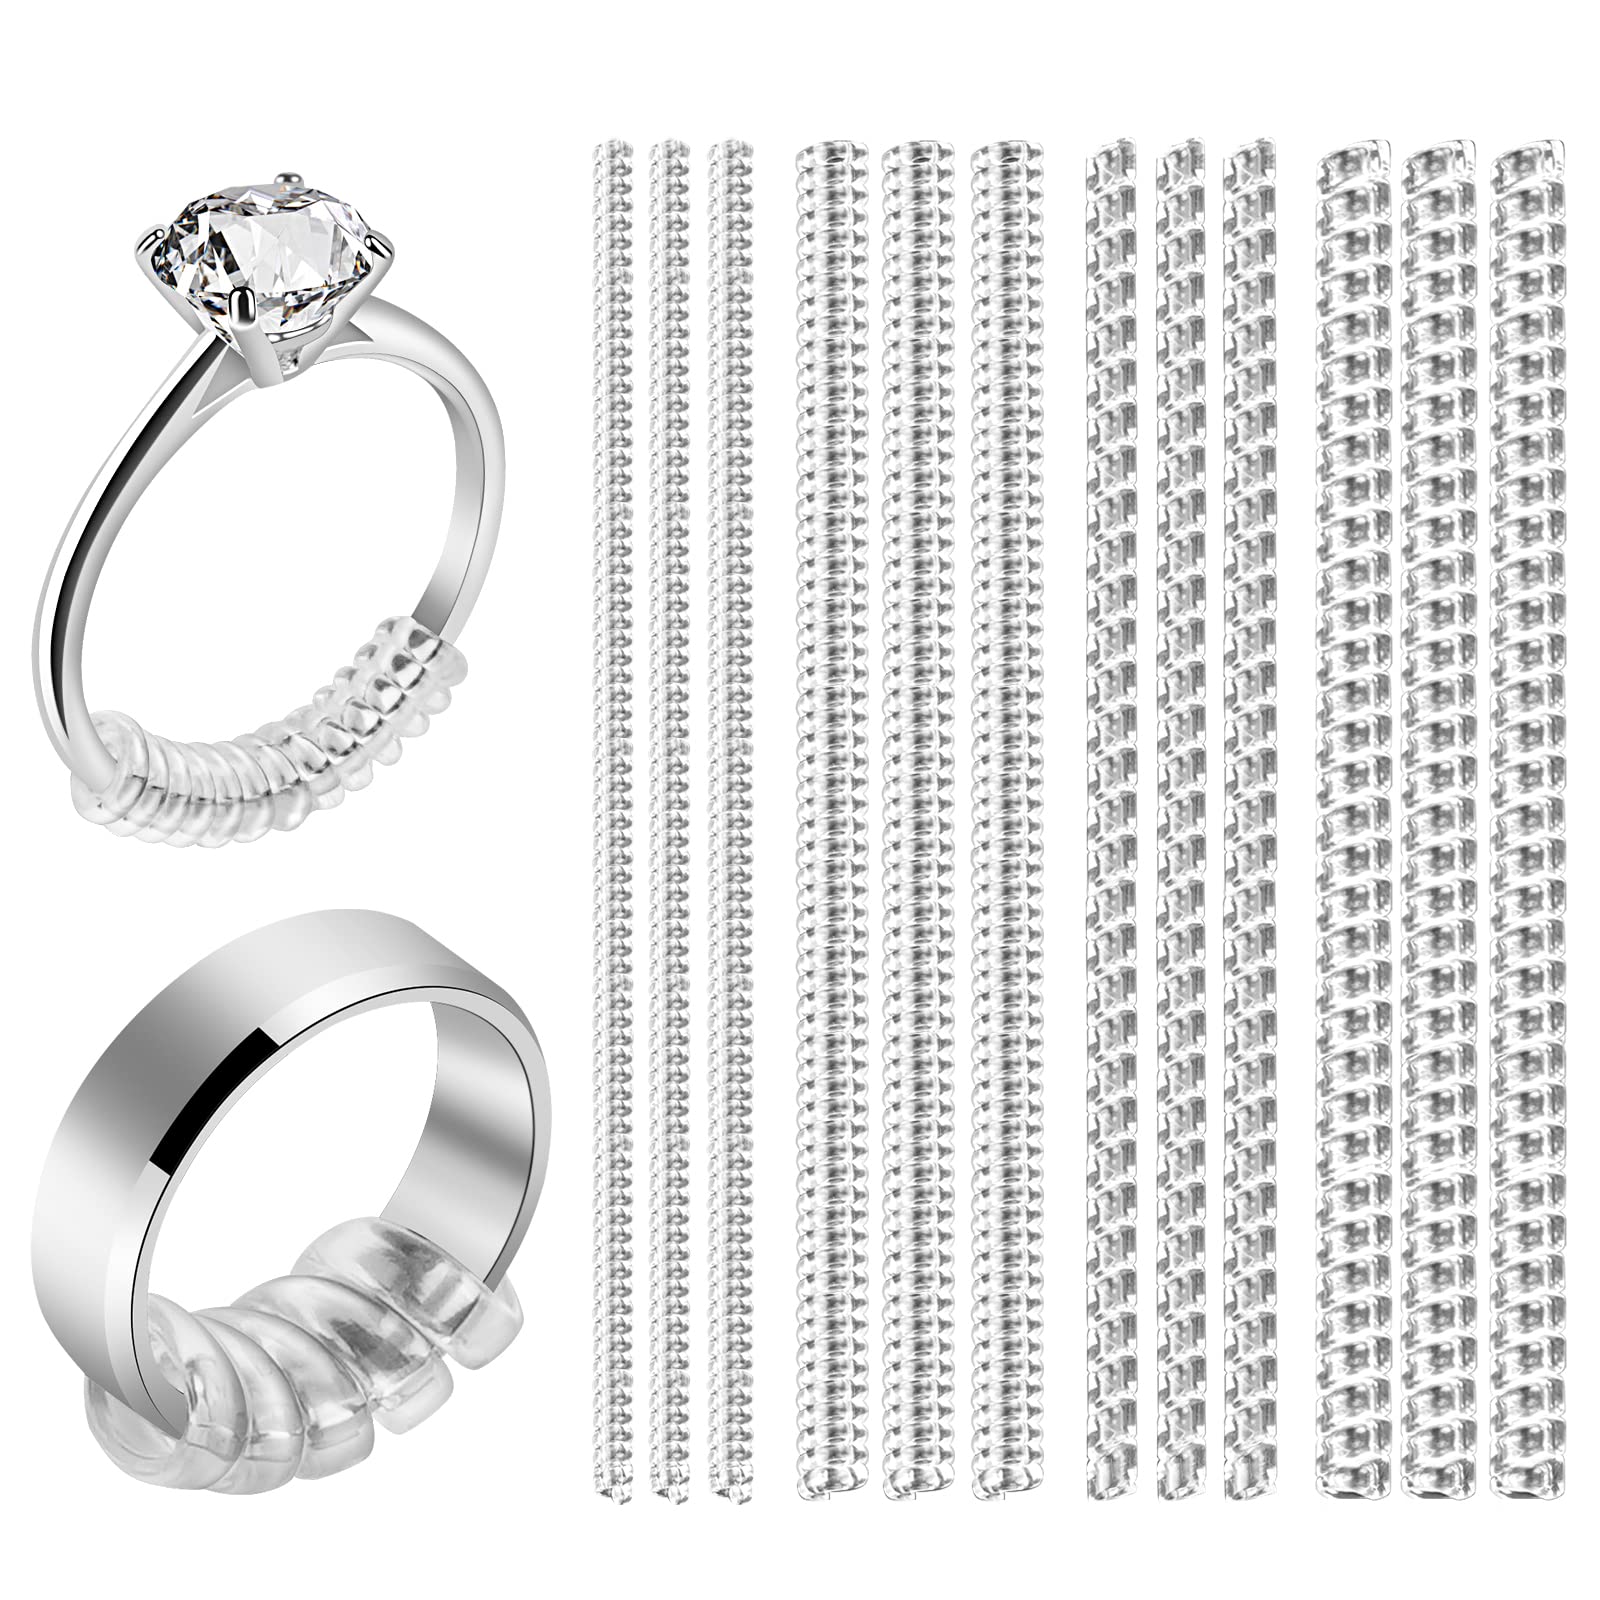 Kenklcie Spacer（Clip-On） Ring Sizer Guard Adjuster Ring Rings Fit Any Rings  Ring Size Adjuster For Loose Rings(Rings) 